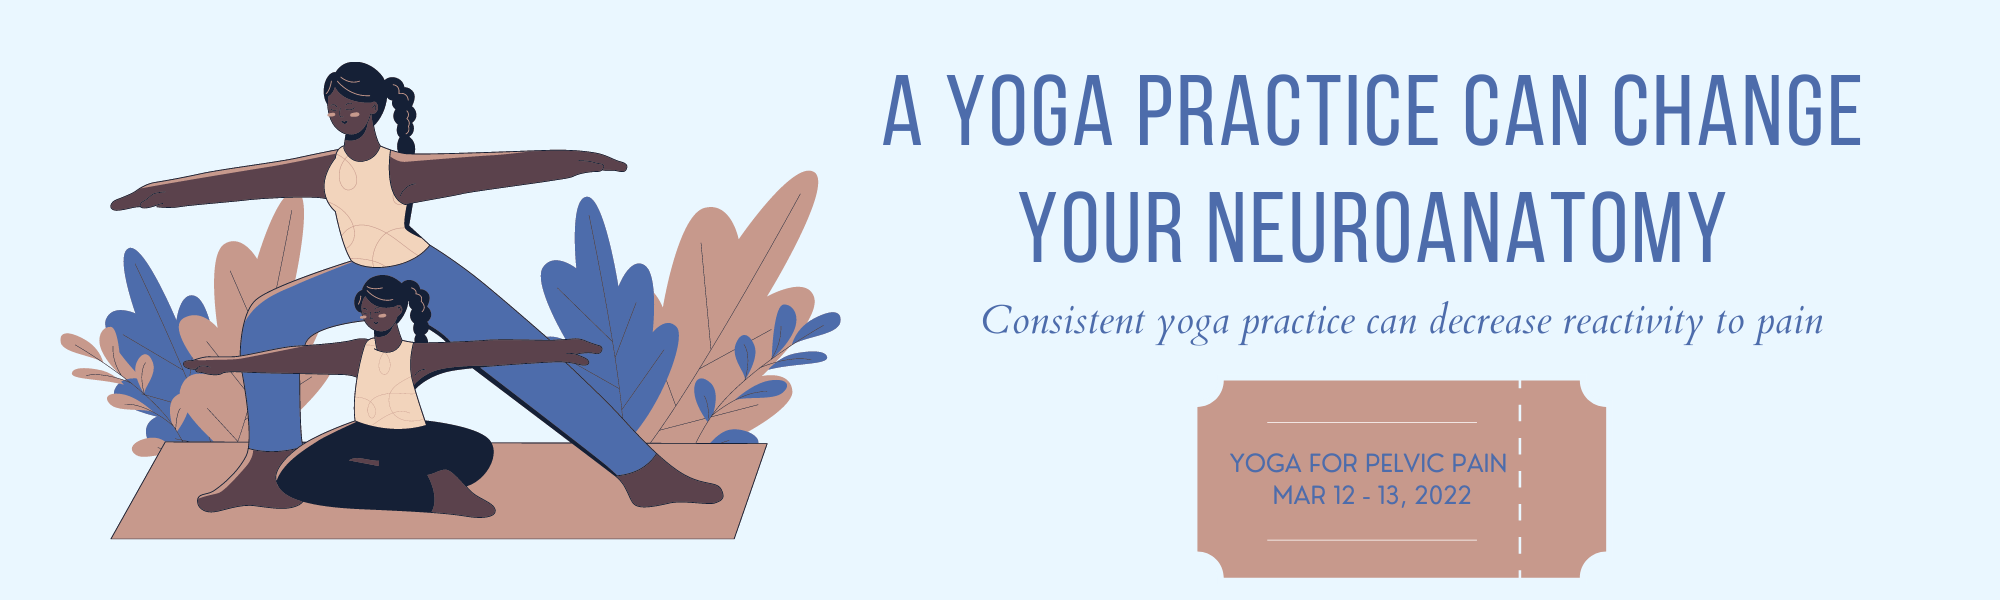 A yoga practice can change your neuroanatomy!